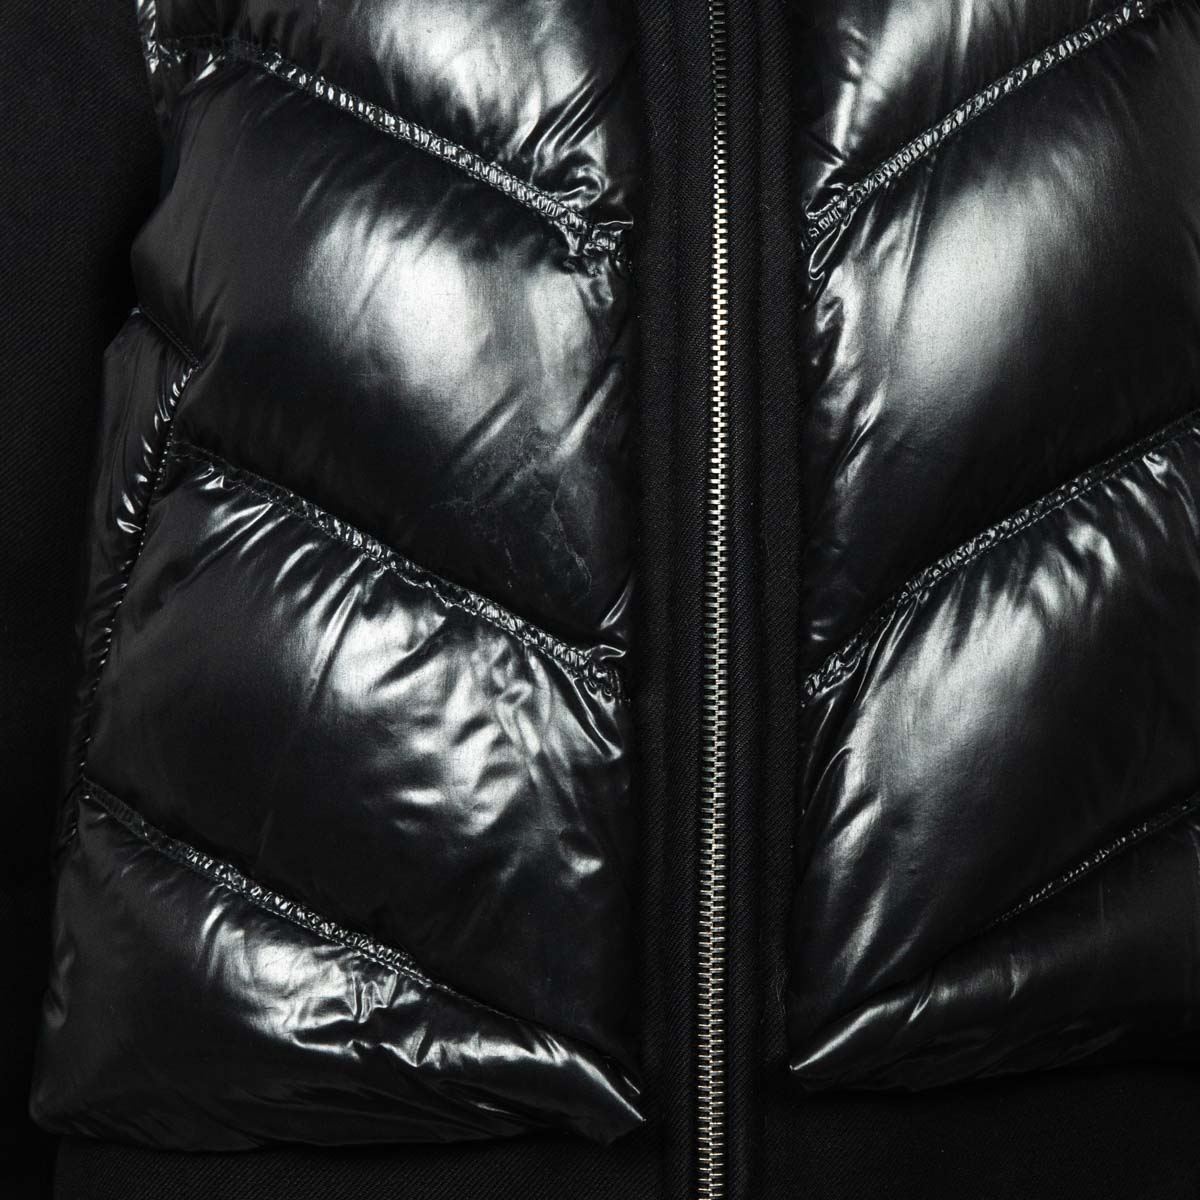 Louis Vuitton Glossy Puffer Jacket, Black, 38